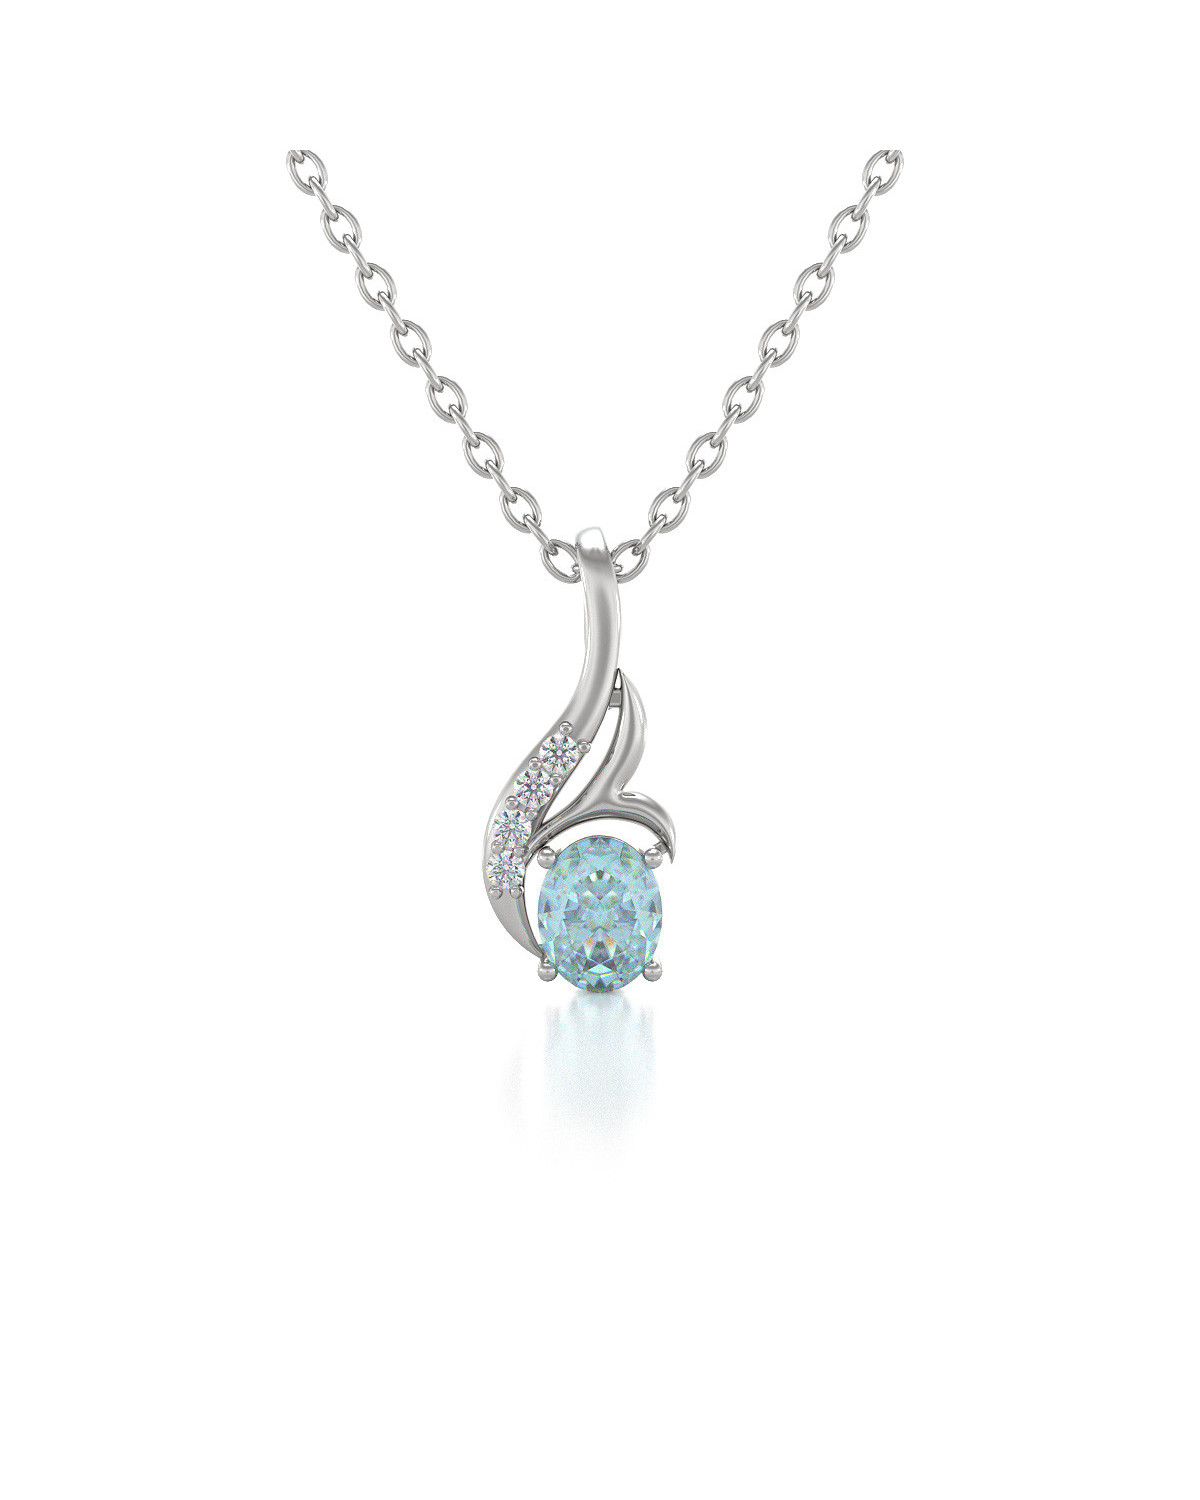 Xtremegems Faceted Aquamarine 925 Silver Pendant Jewelry 3/4 20486P 